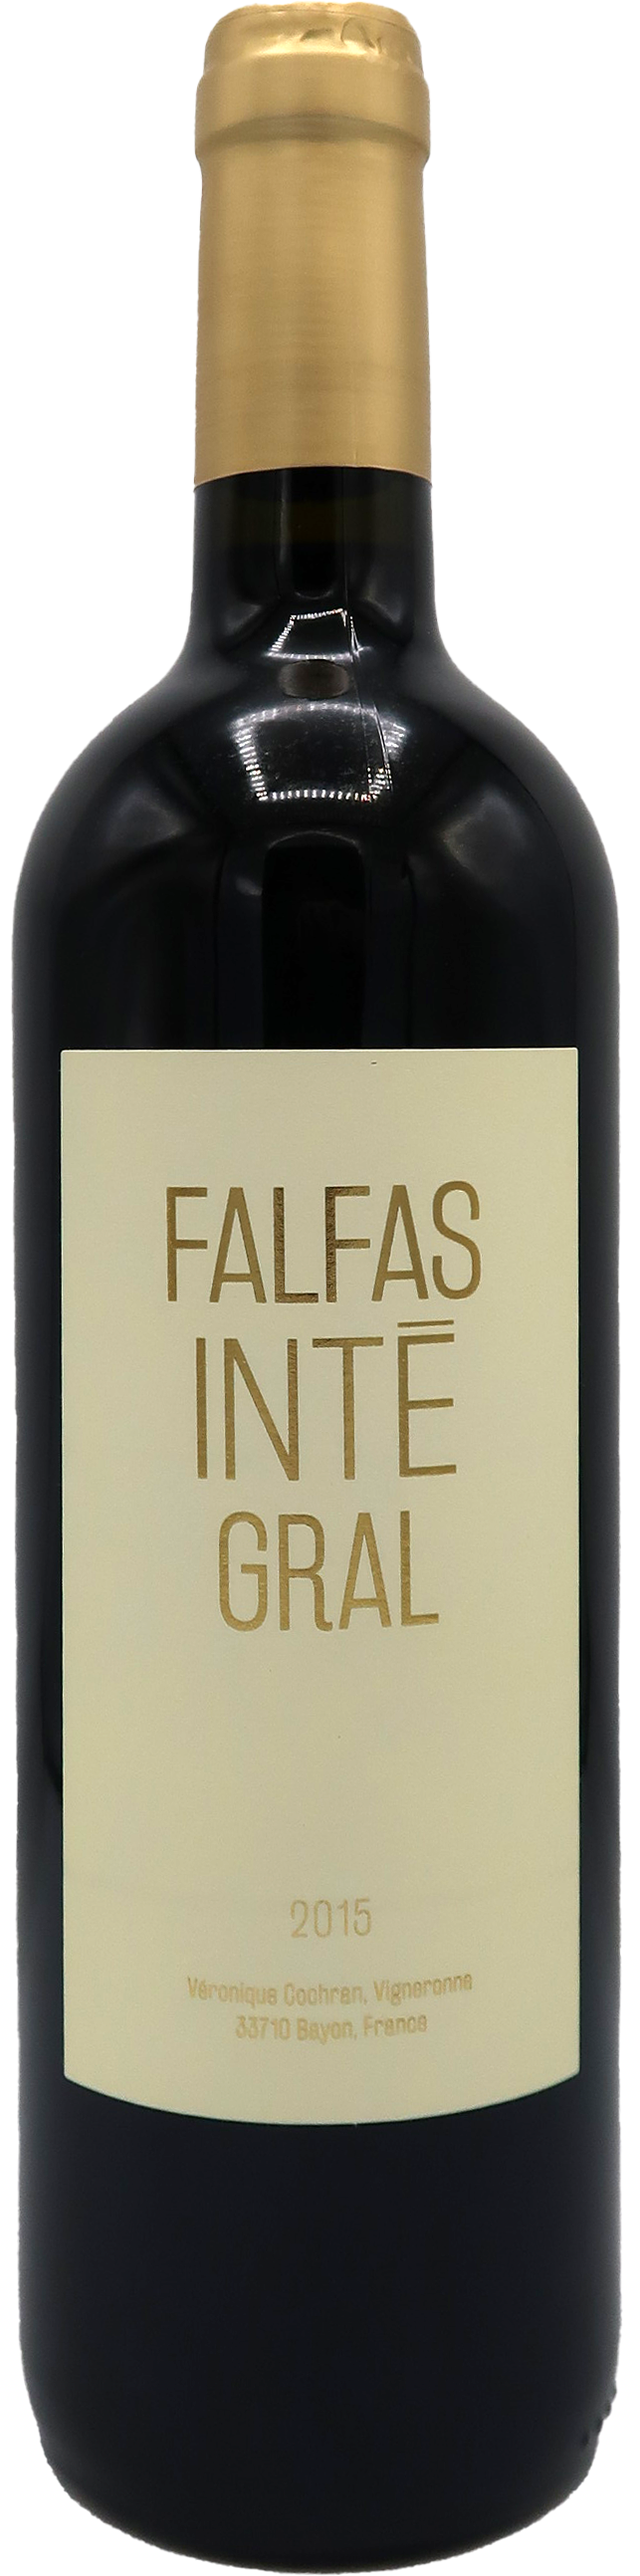 Intégral 2015 - Château Falfas